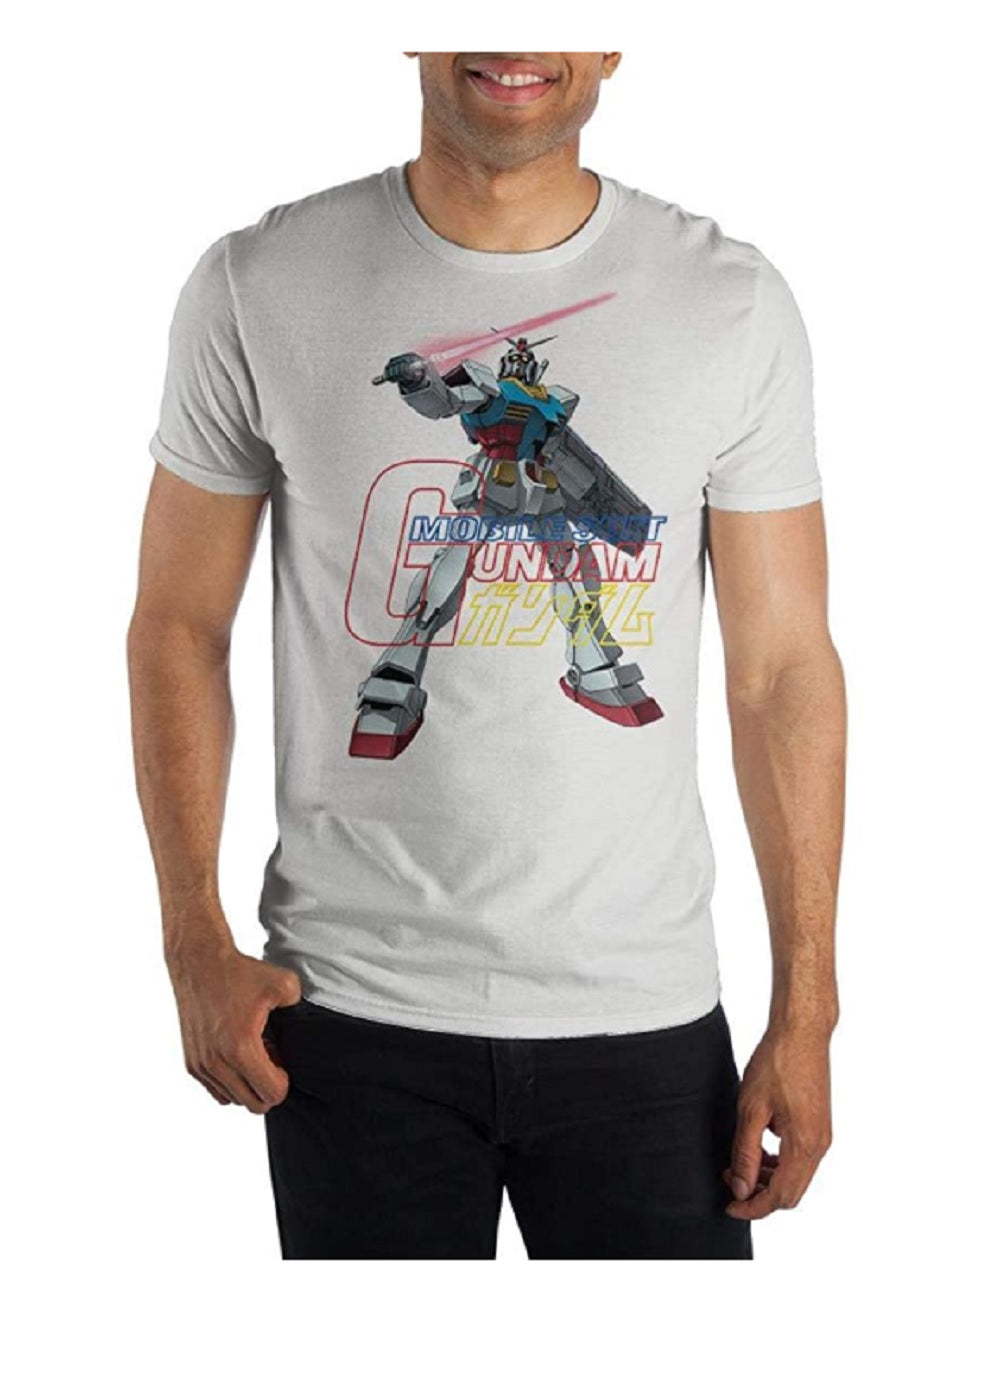 Gundam Mobile Suit Anime Cartoon Adult T Shirt